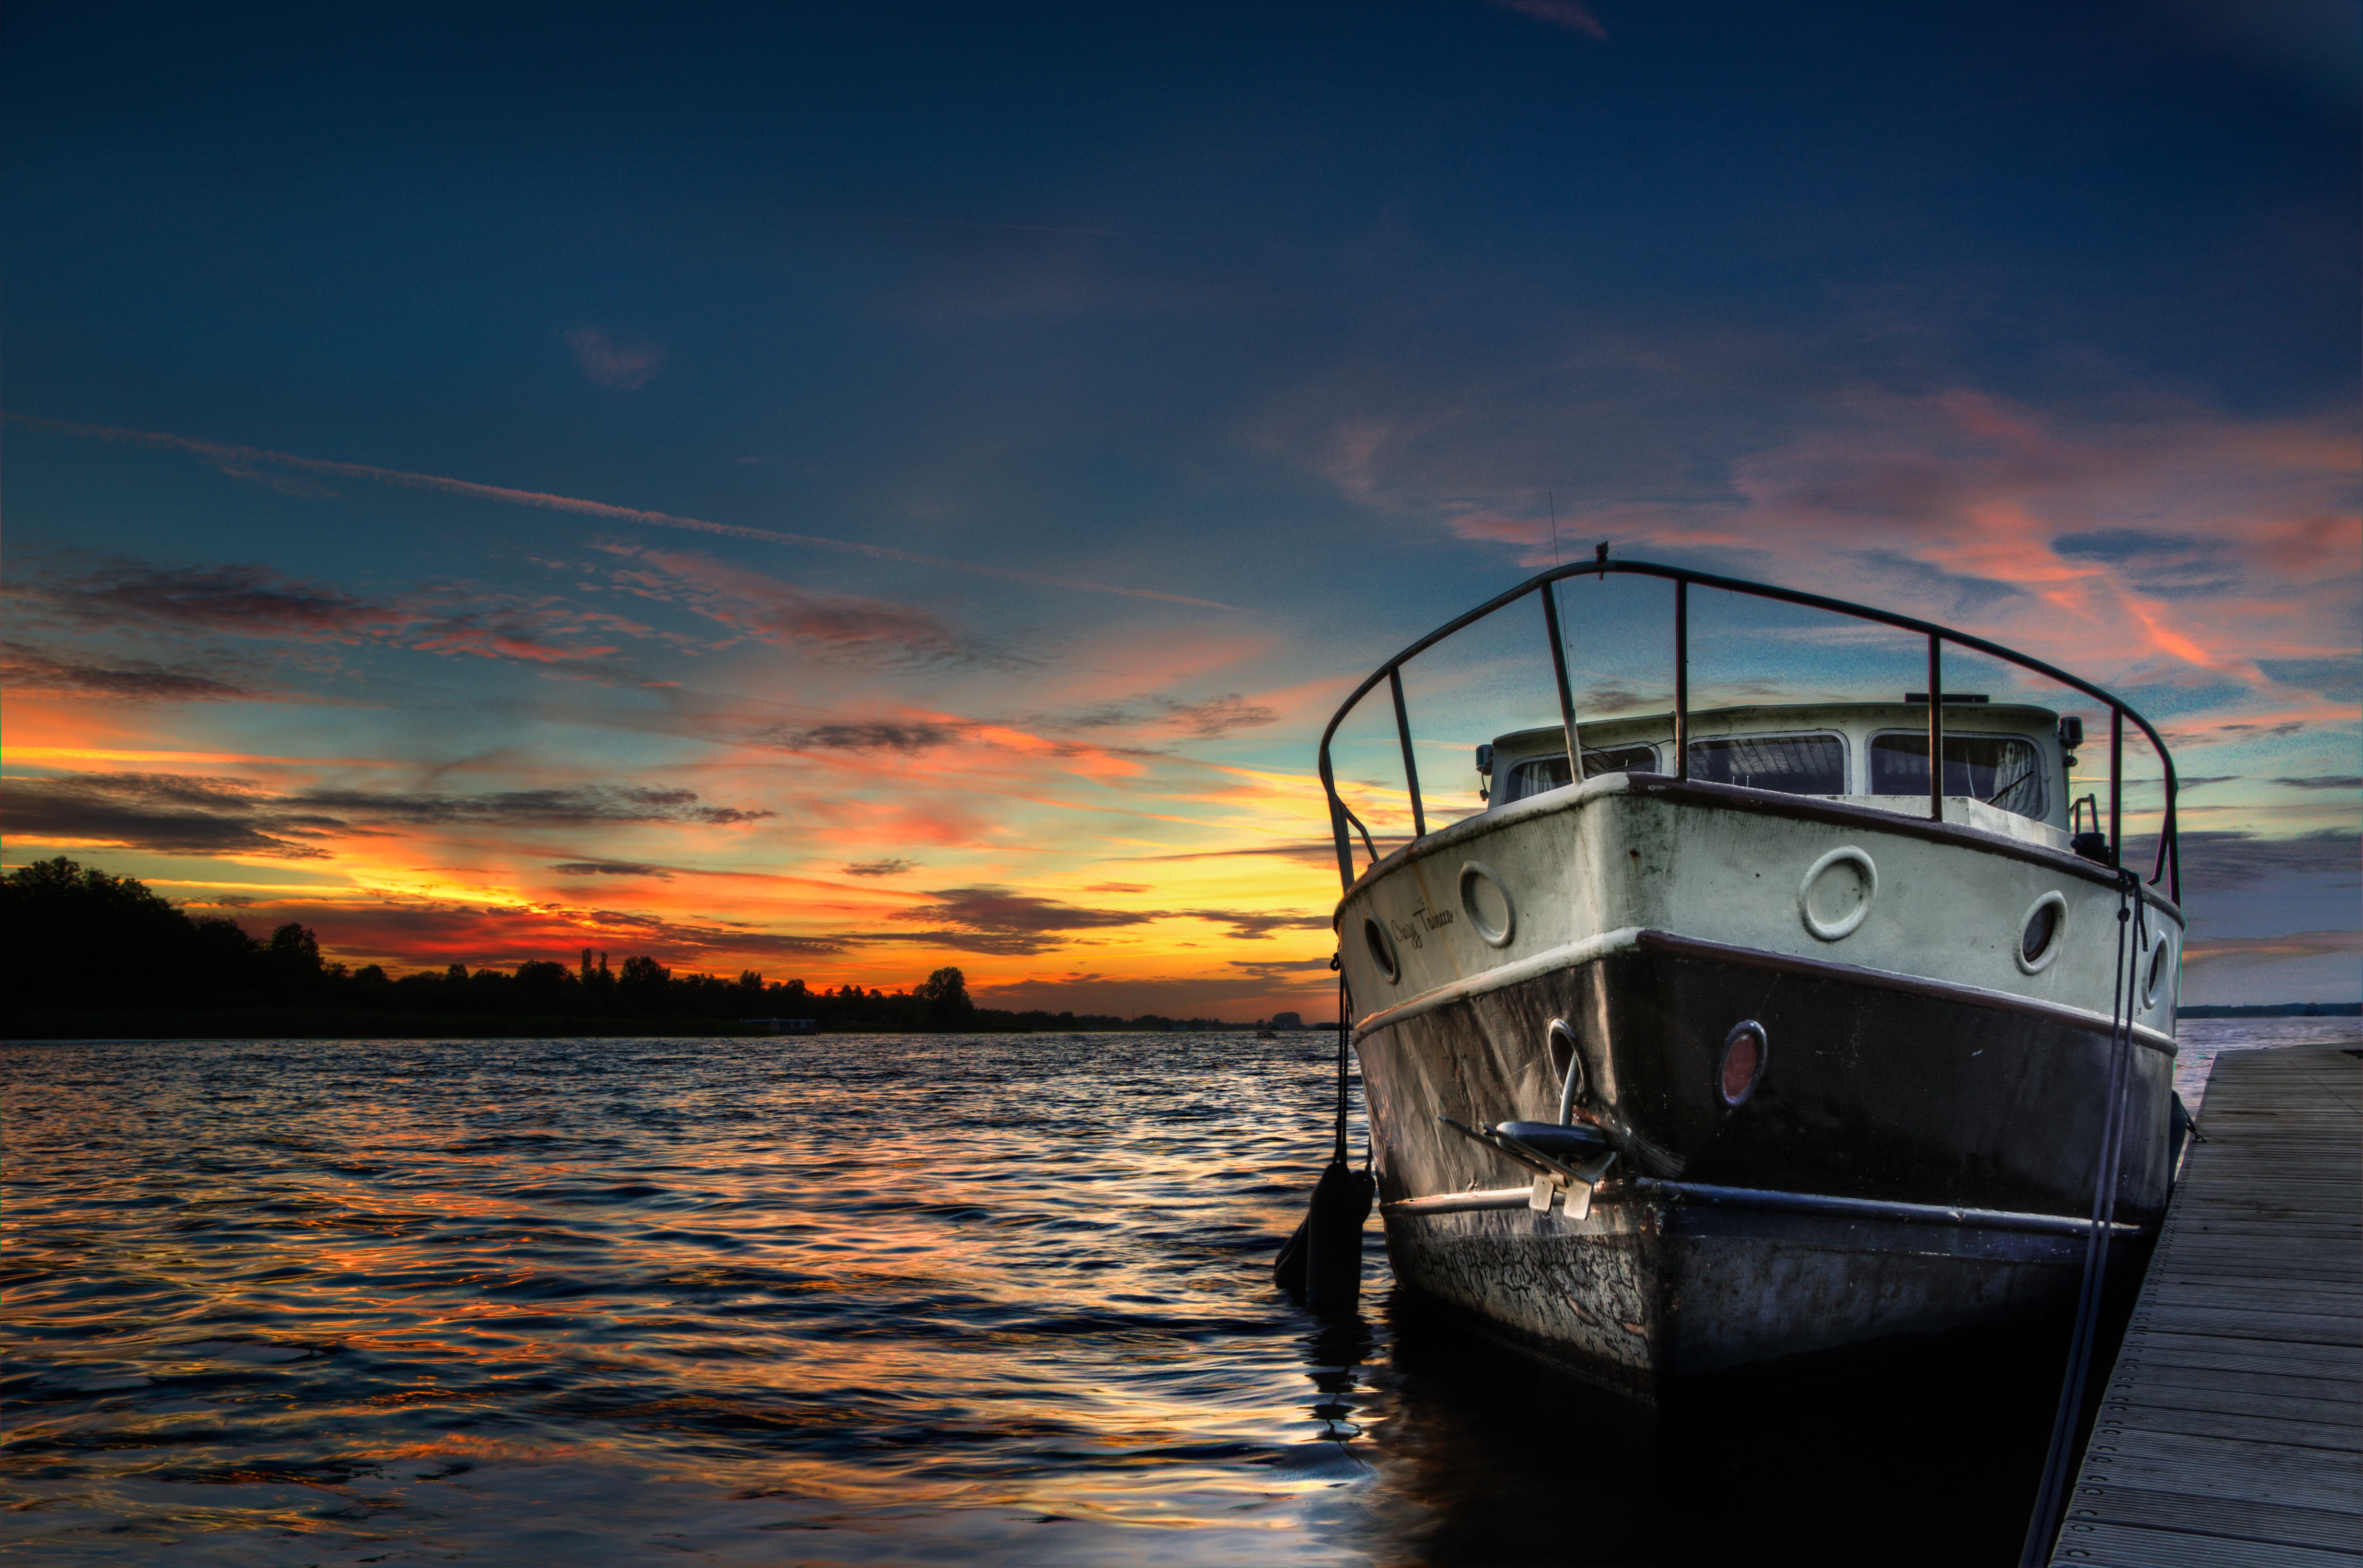 Fishing boat on the seashore during sunset